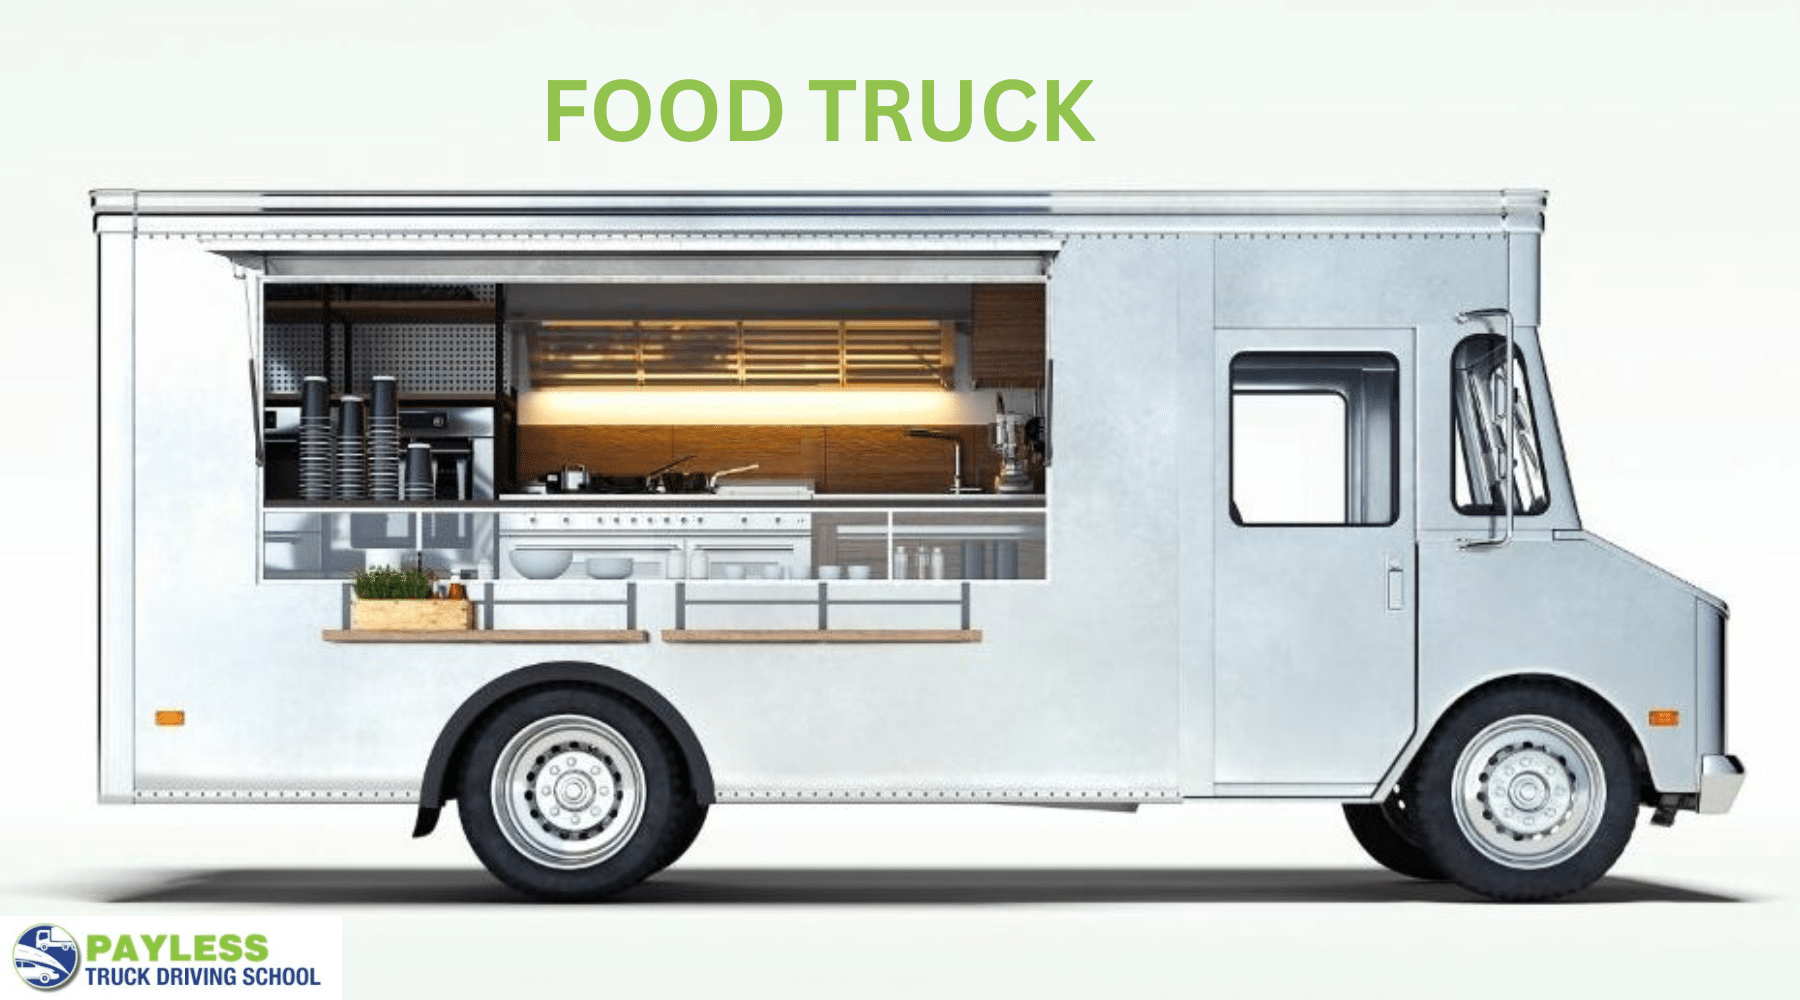 Food Truck 1 